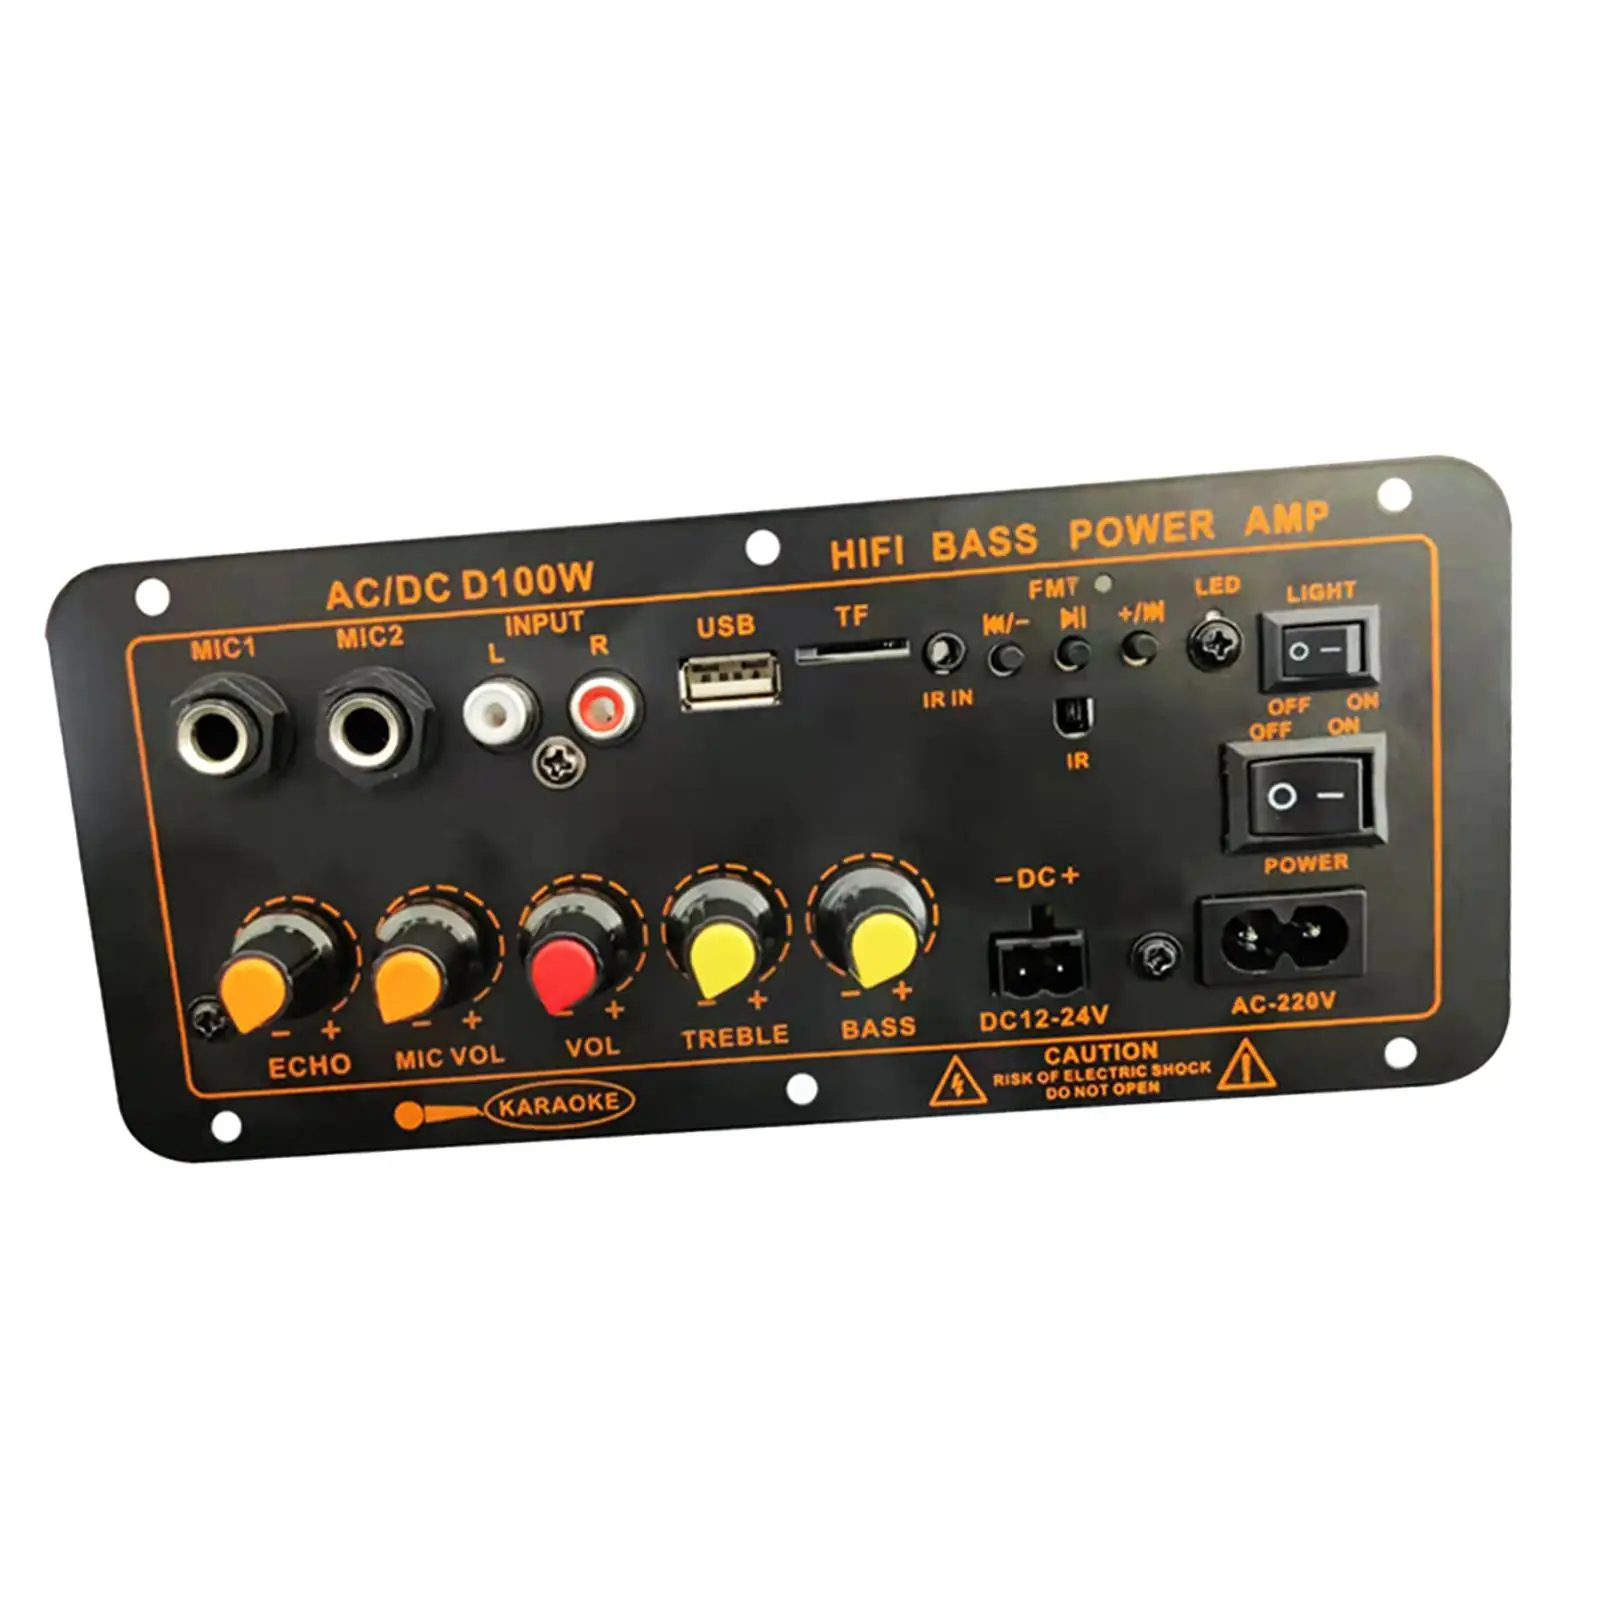 Audio Amplifier Board Premium High Performance DC12V-24V Stereo Power Amp Audio Amp Module for Karaoke Outdoor Home Speakers